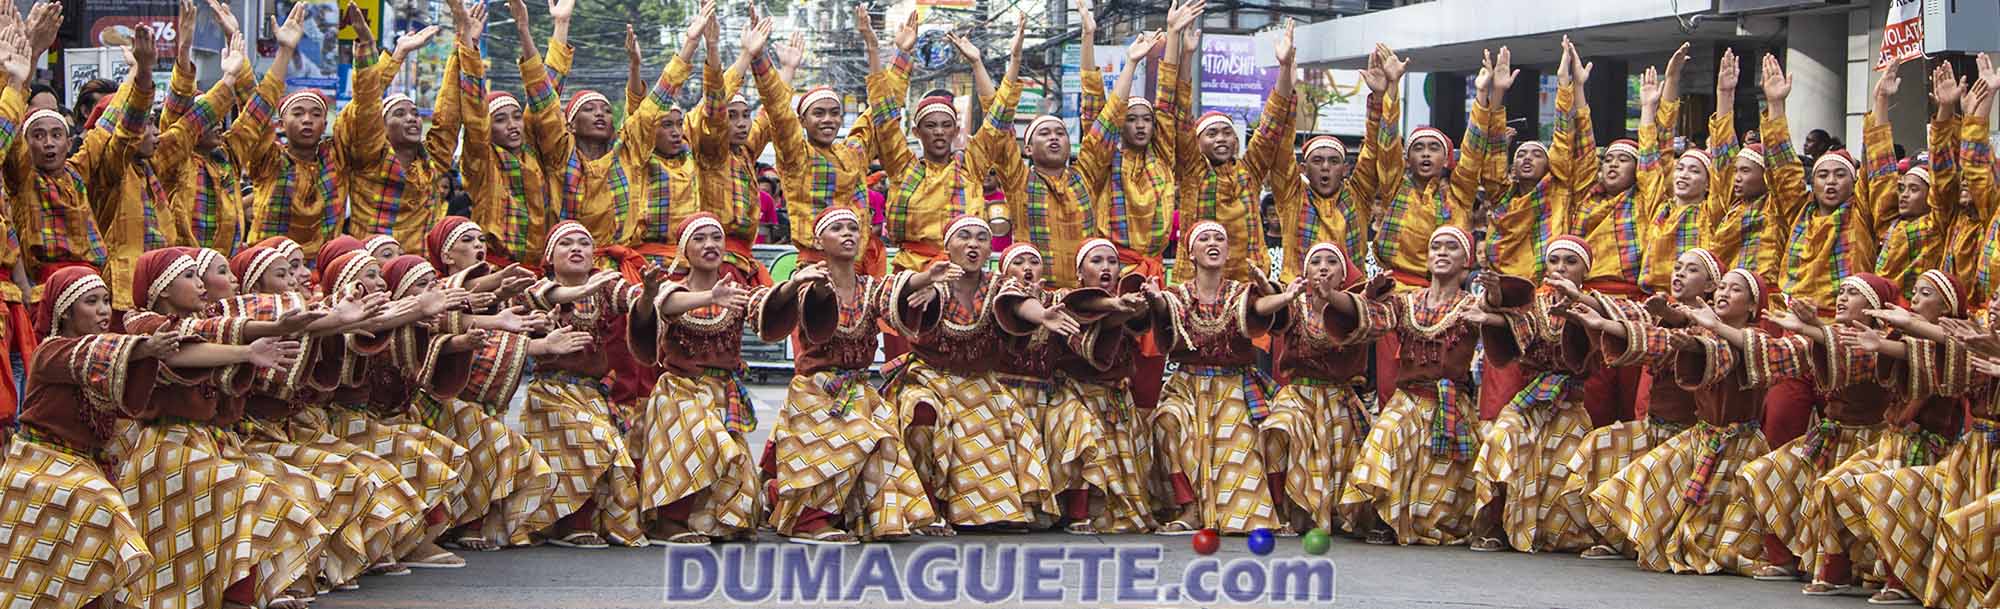 Buglasan Festival 2019 - Street Dancing